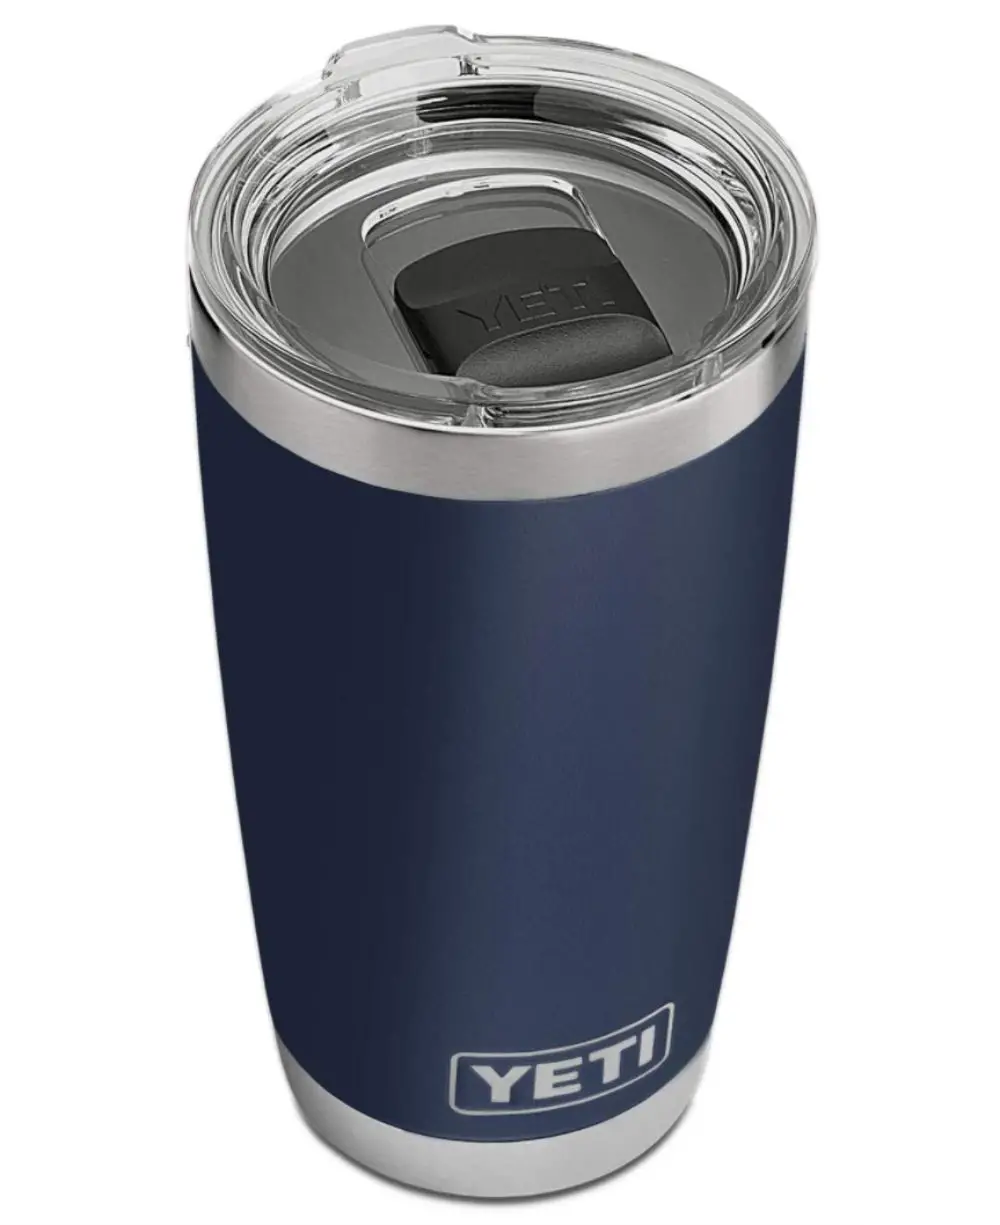 yeti-tumbler-cup-20-oz - The Cooler Box